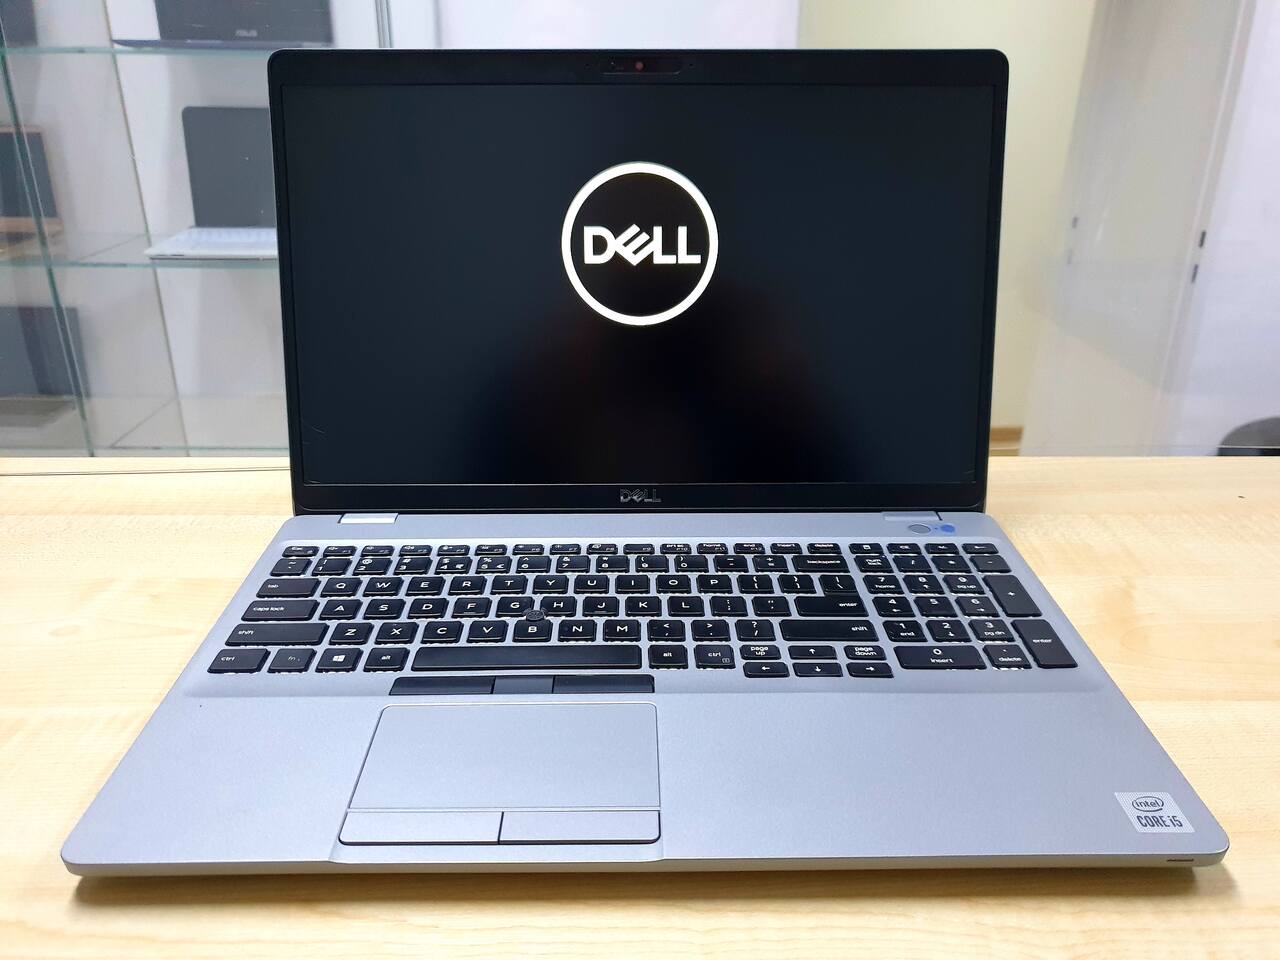 Serwis-komputerowy-Dell-naprawa-laptopa